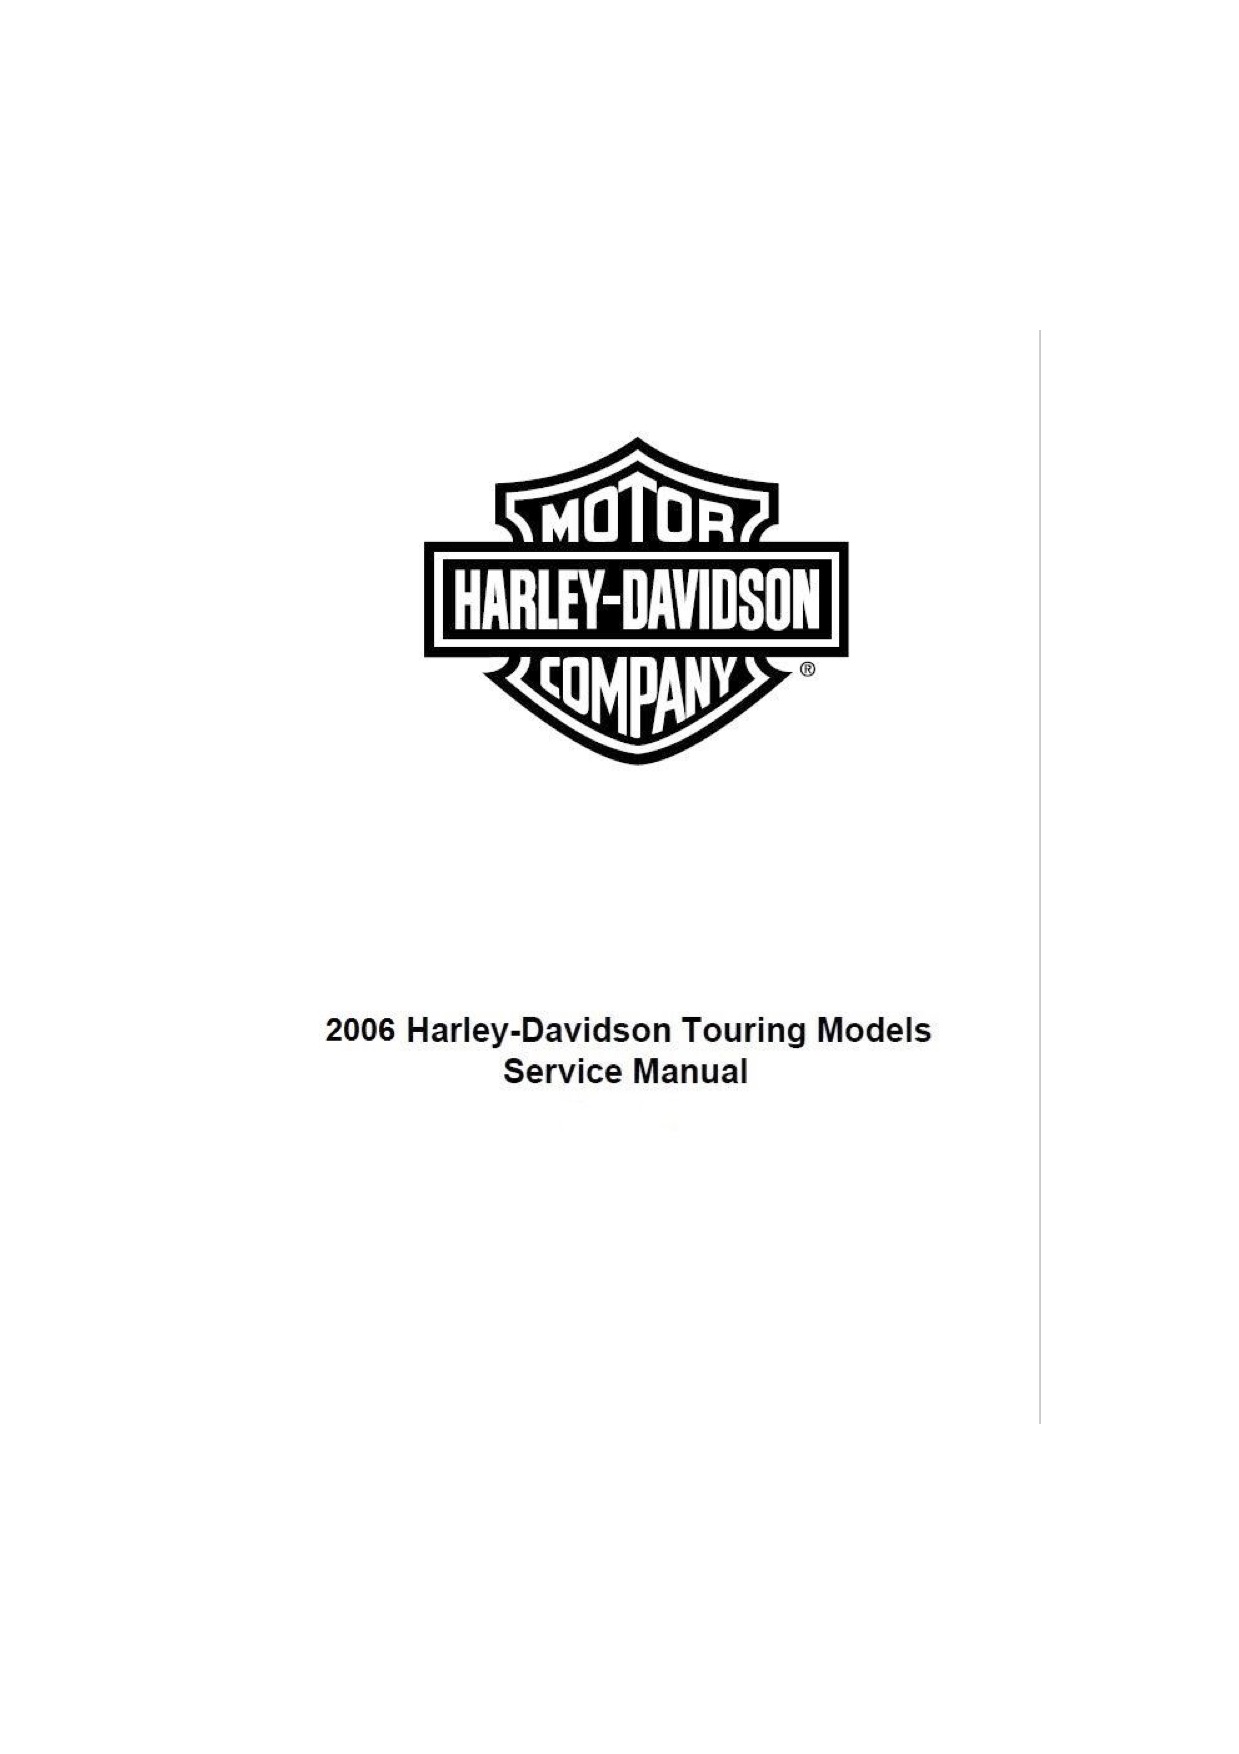 2006 Touring Models Service Manual